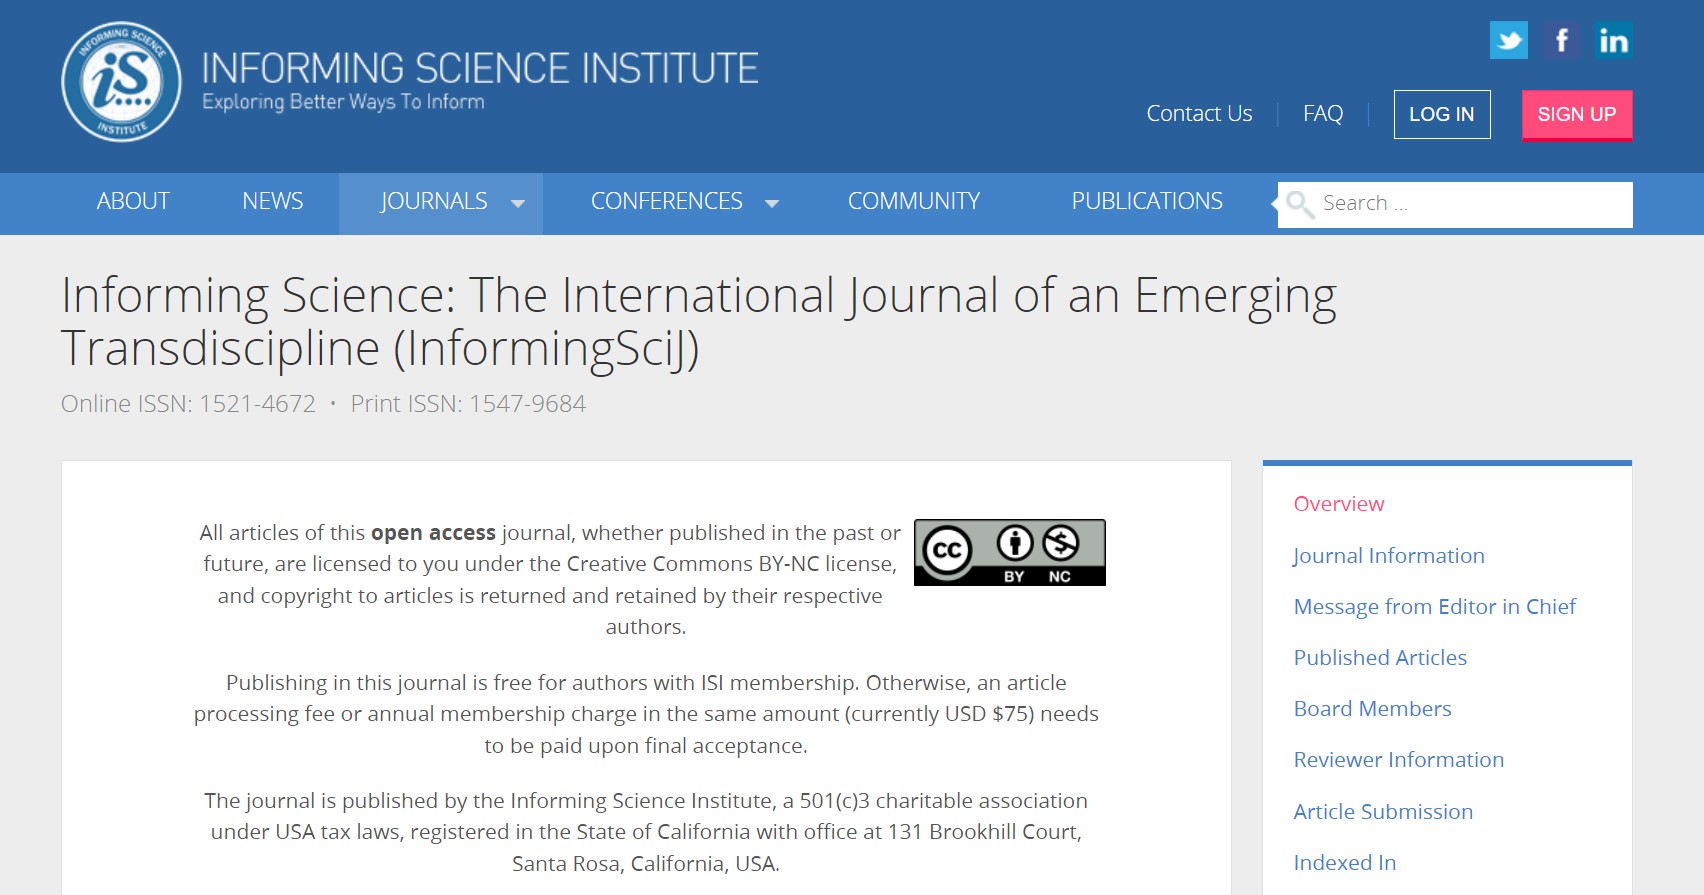 The International Journal of an Emerging Transdiscipline